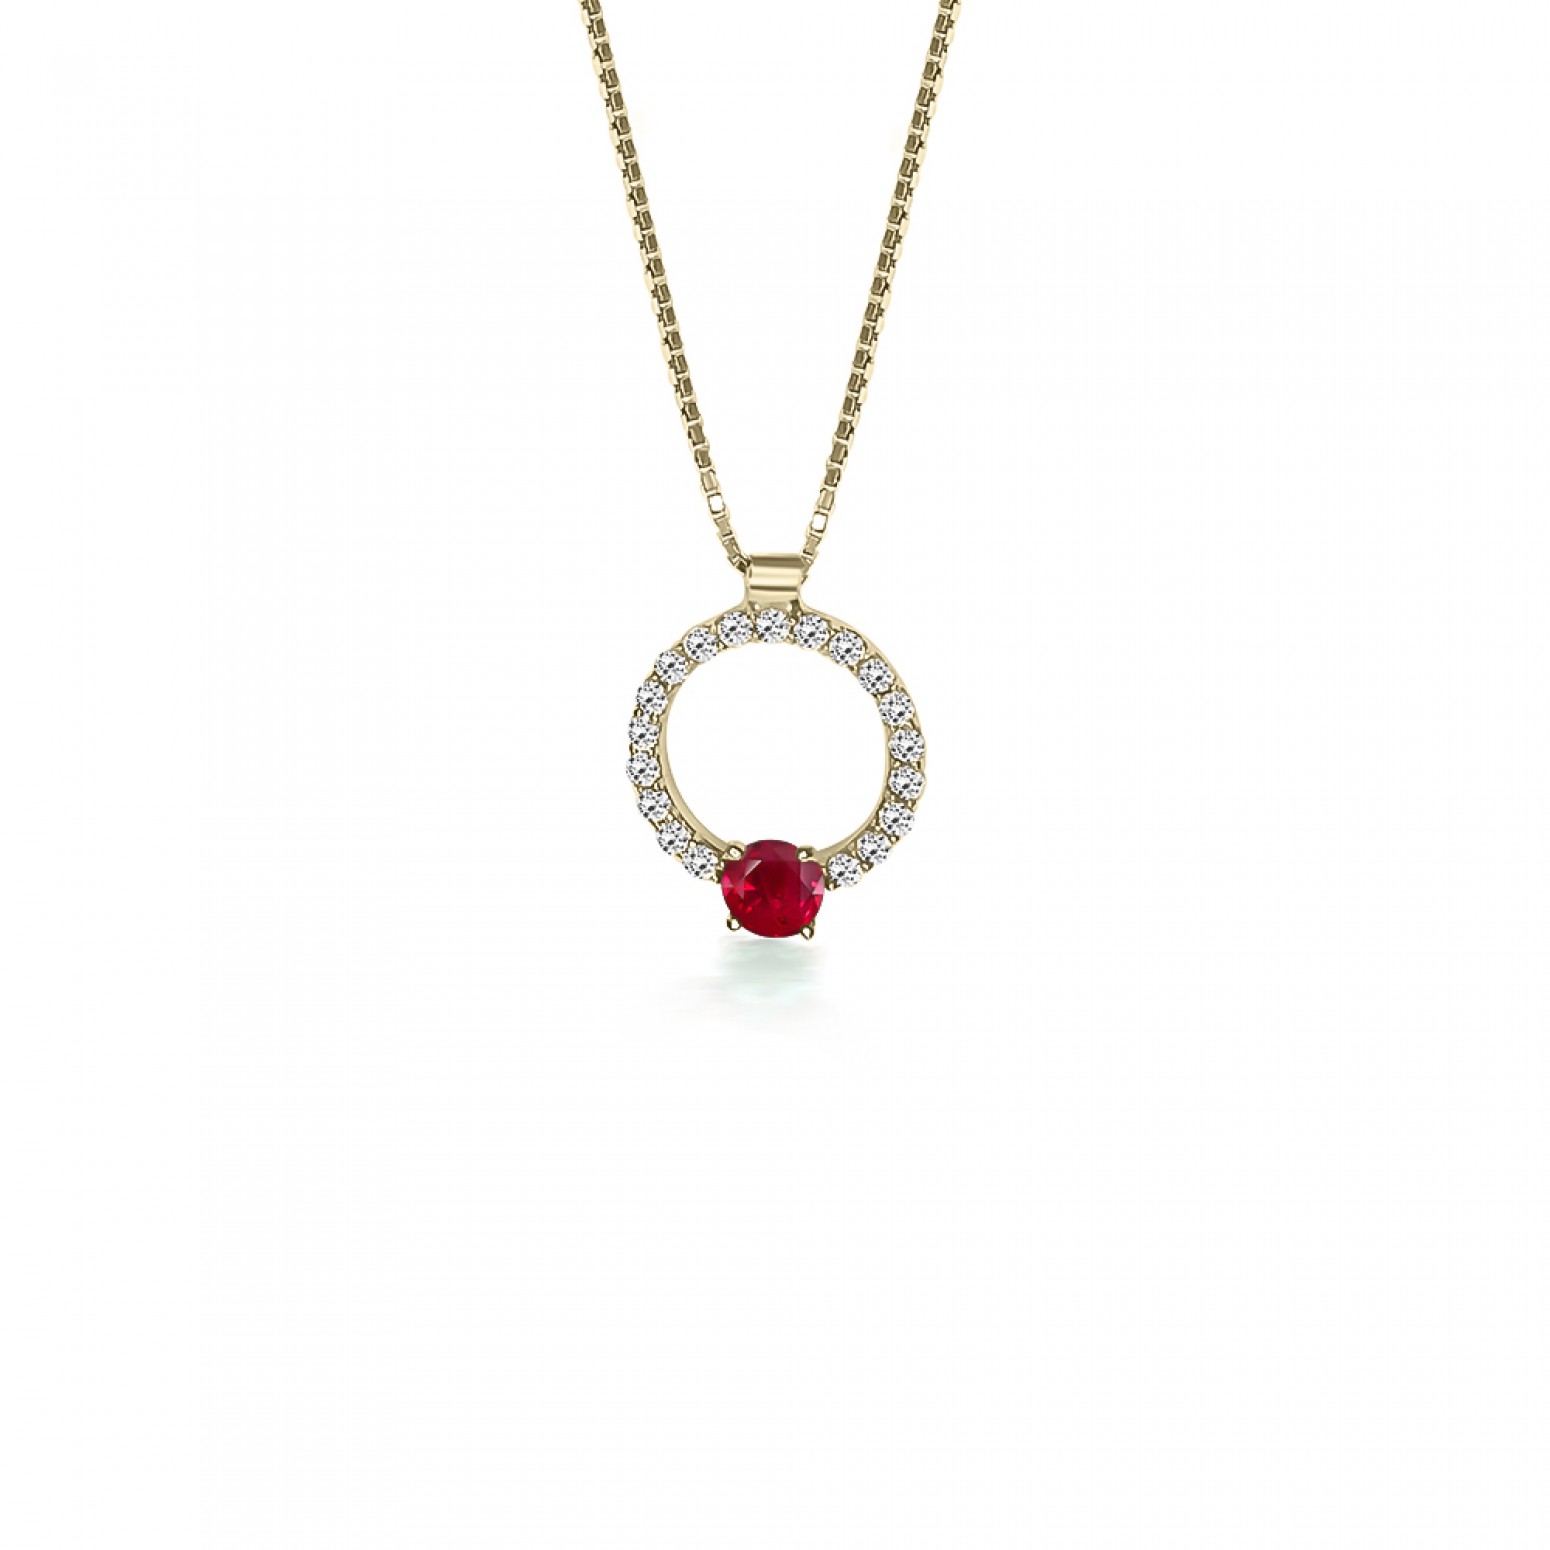 Round necklace, Κ14 gold with red and white zircon, ko5657 NECKLACES Κοσμηματα - chrilia.gr